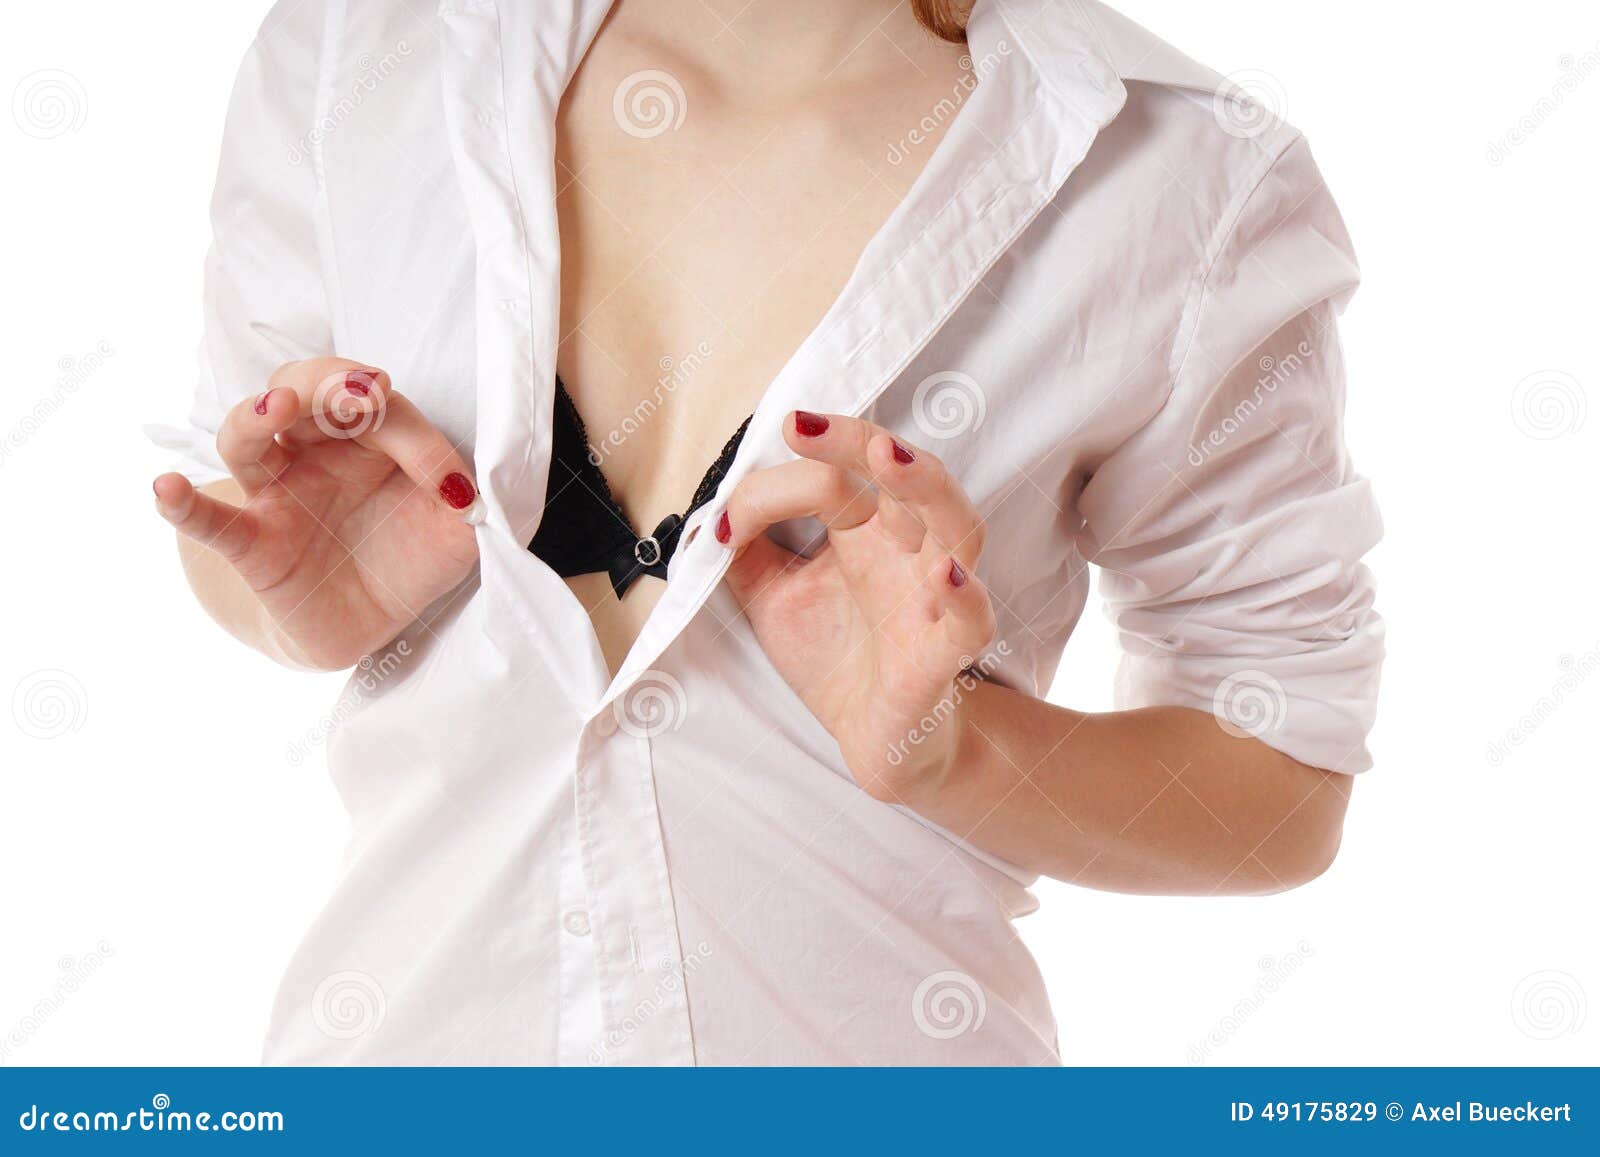 Photo about Unrecognizable woman unbuttoning blouse revealing her bra. 